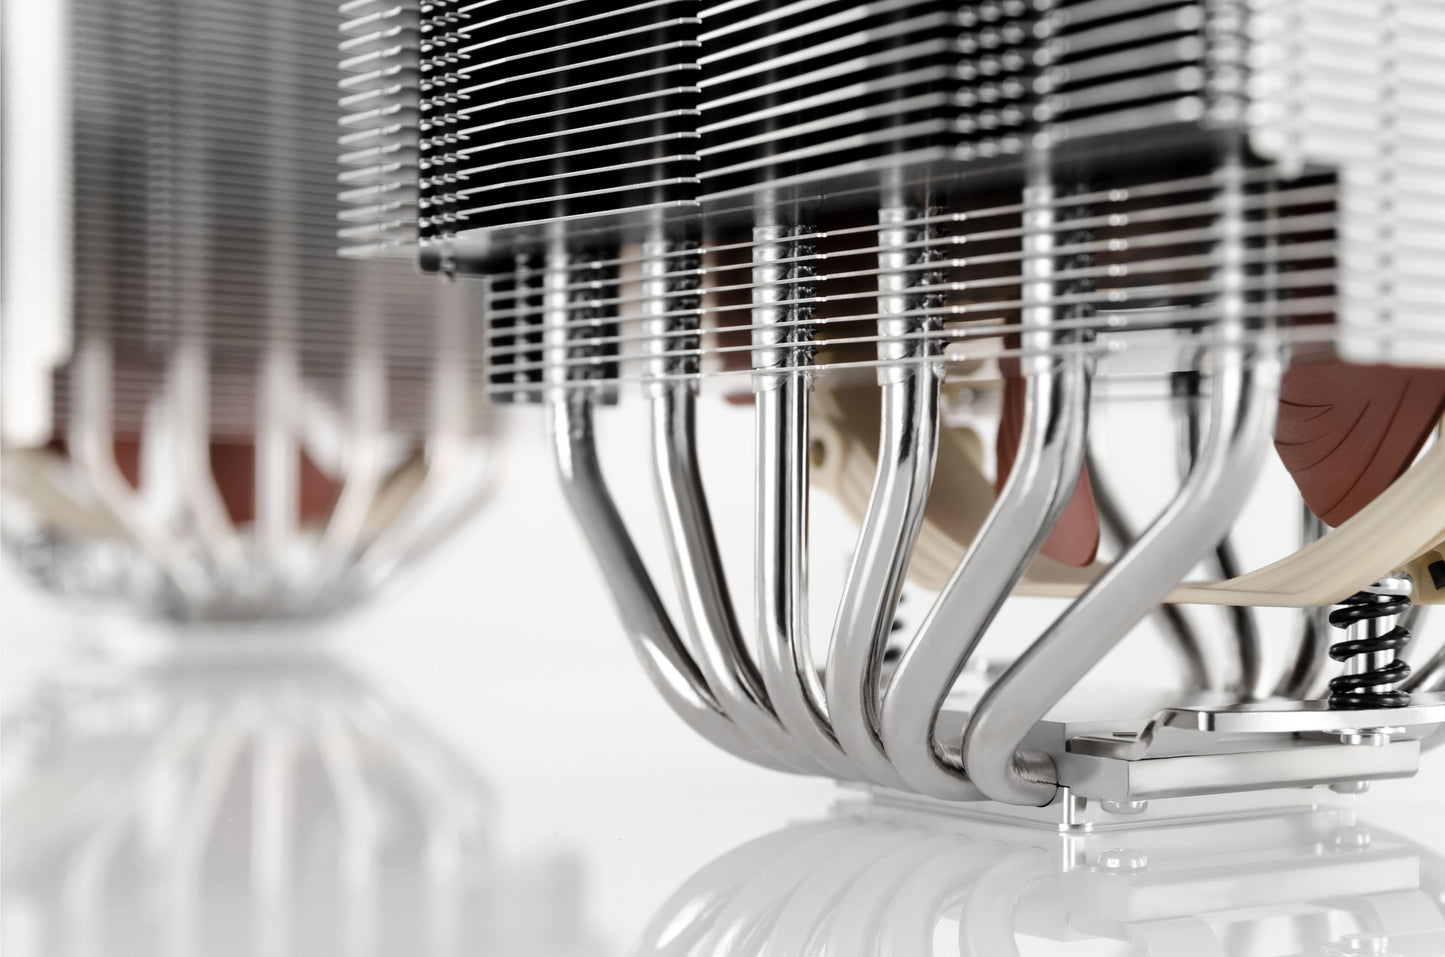 Noctua NH-D15S High compatibility Version of NH-D15 Cooling Fan Cooling Fan-INTEL SOCKET (NH-D15S)